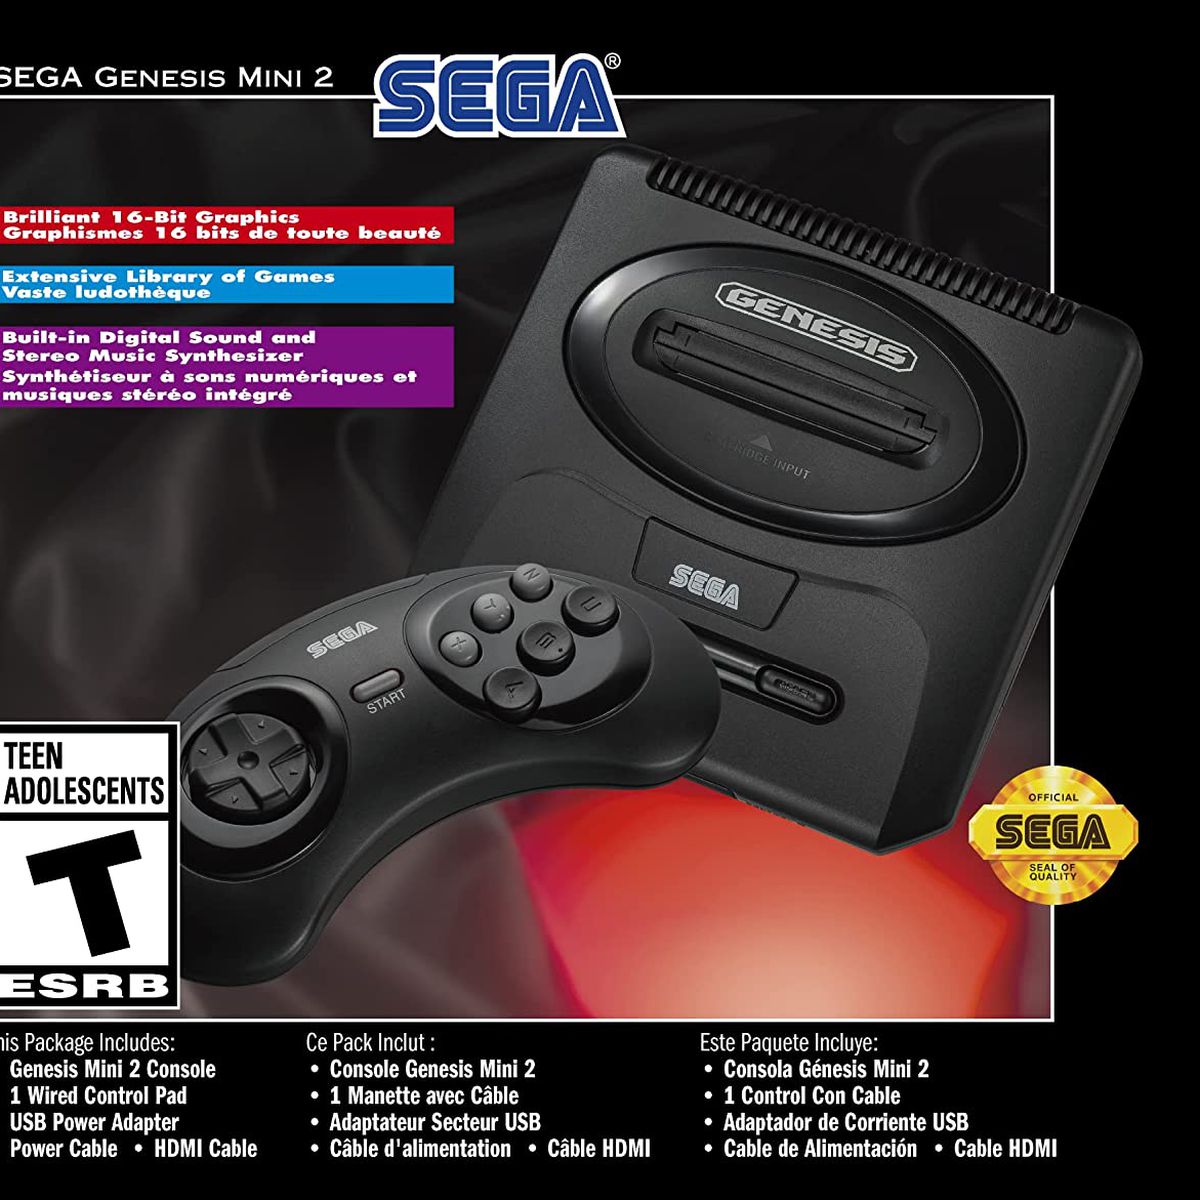 Produktverpackung für den Sega Genesis Mini 2